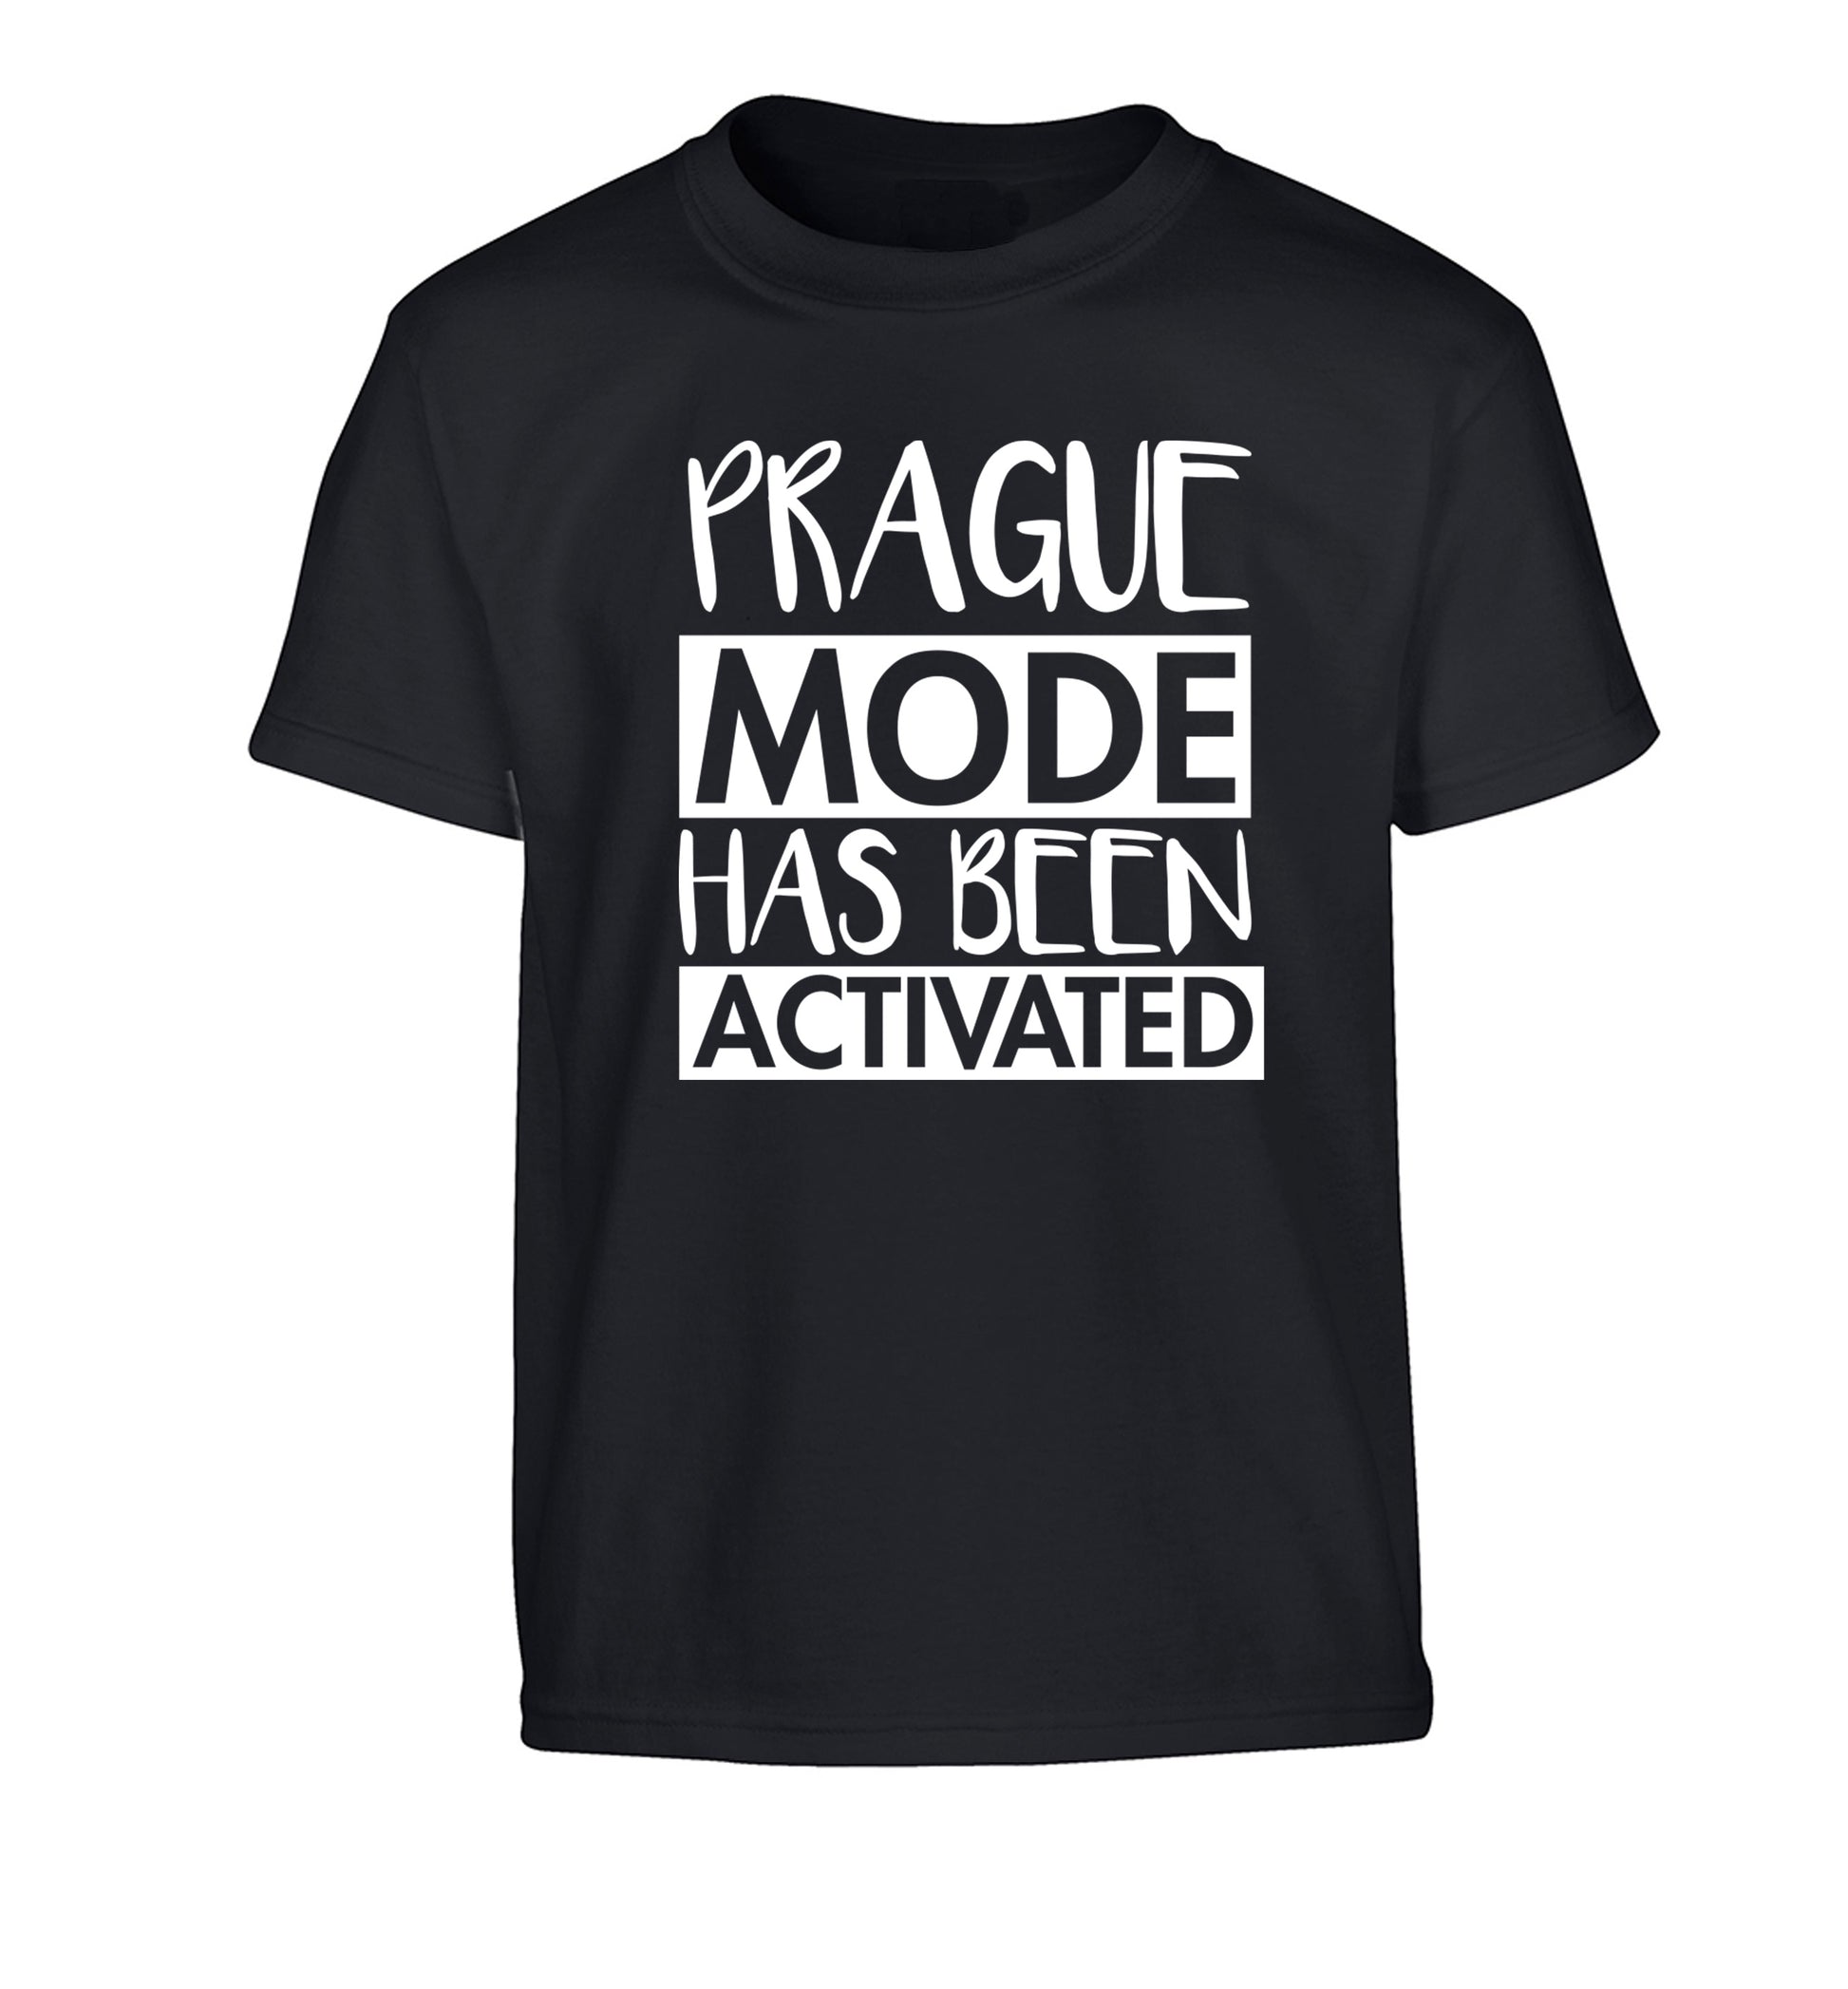 Prague mode has been activated Children's black Tshirt 12-13 Years